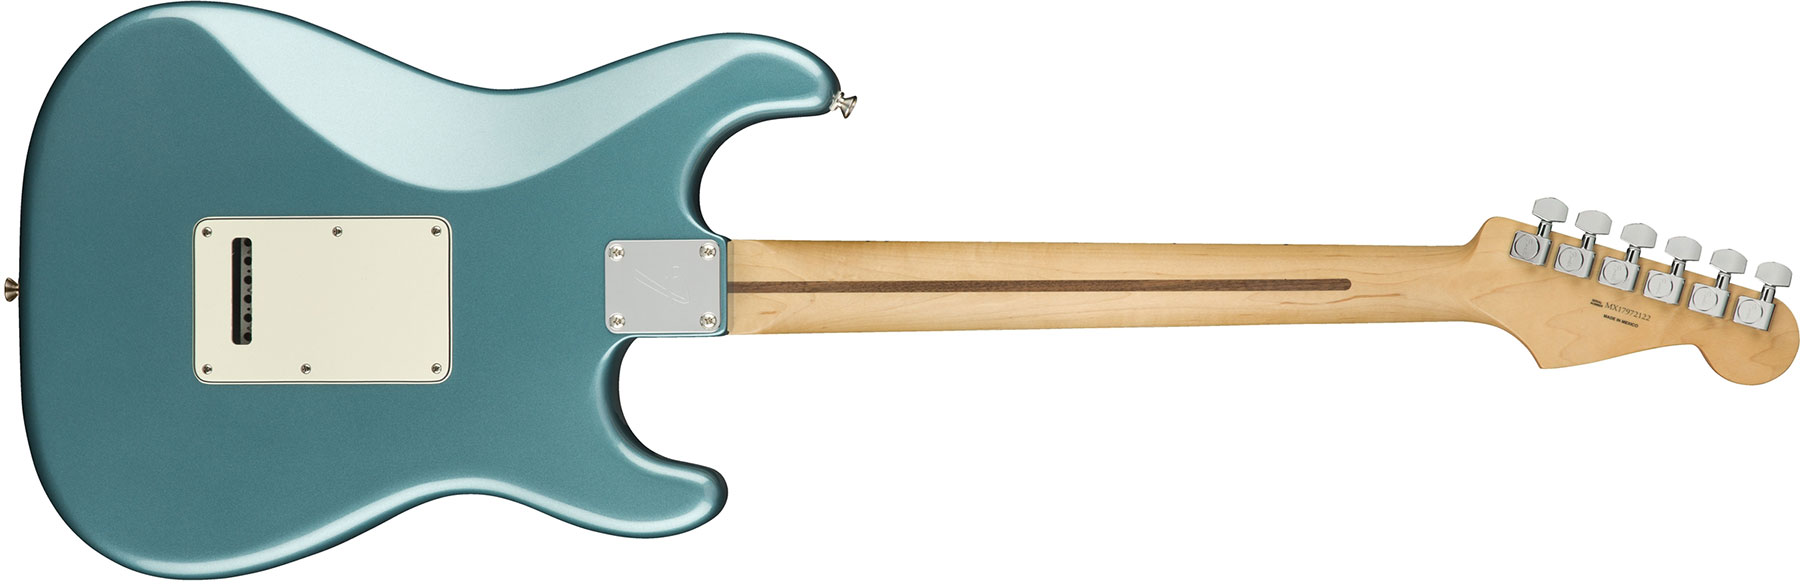 Fender Strat Player Lh Gaucher Mex Sss Mn - Tidepool - Left-handed electric guitar - Variation 1